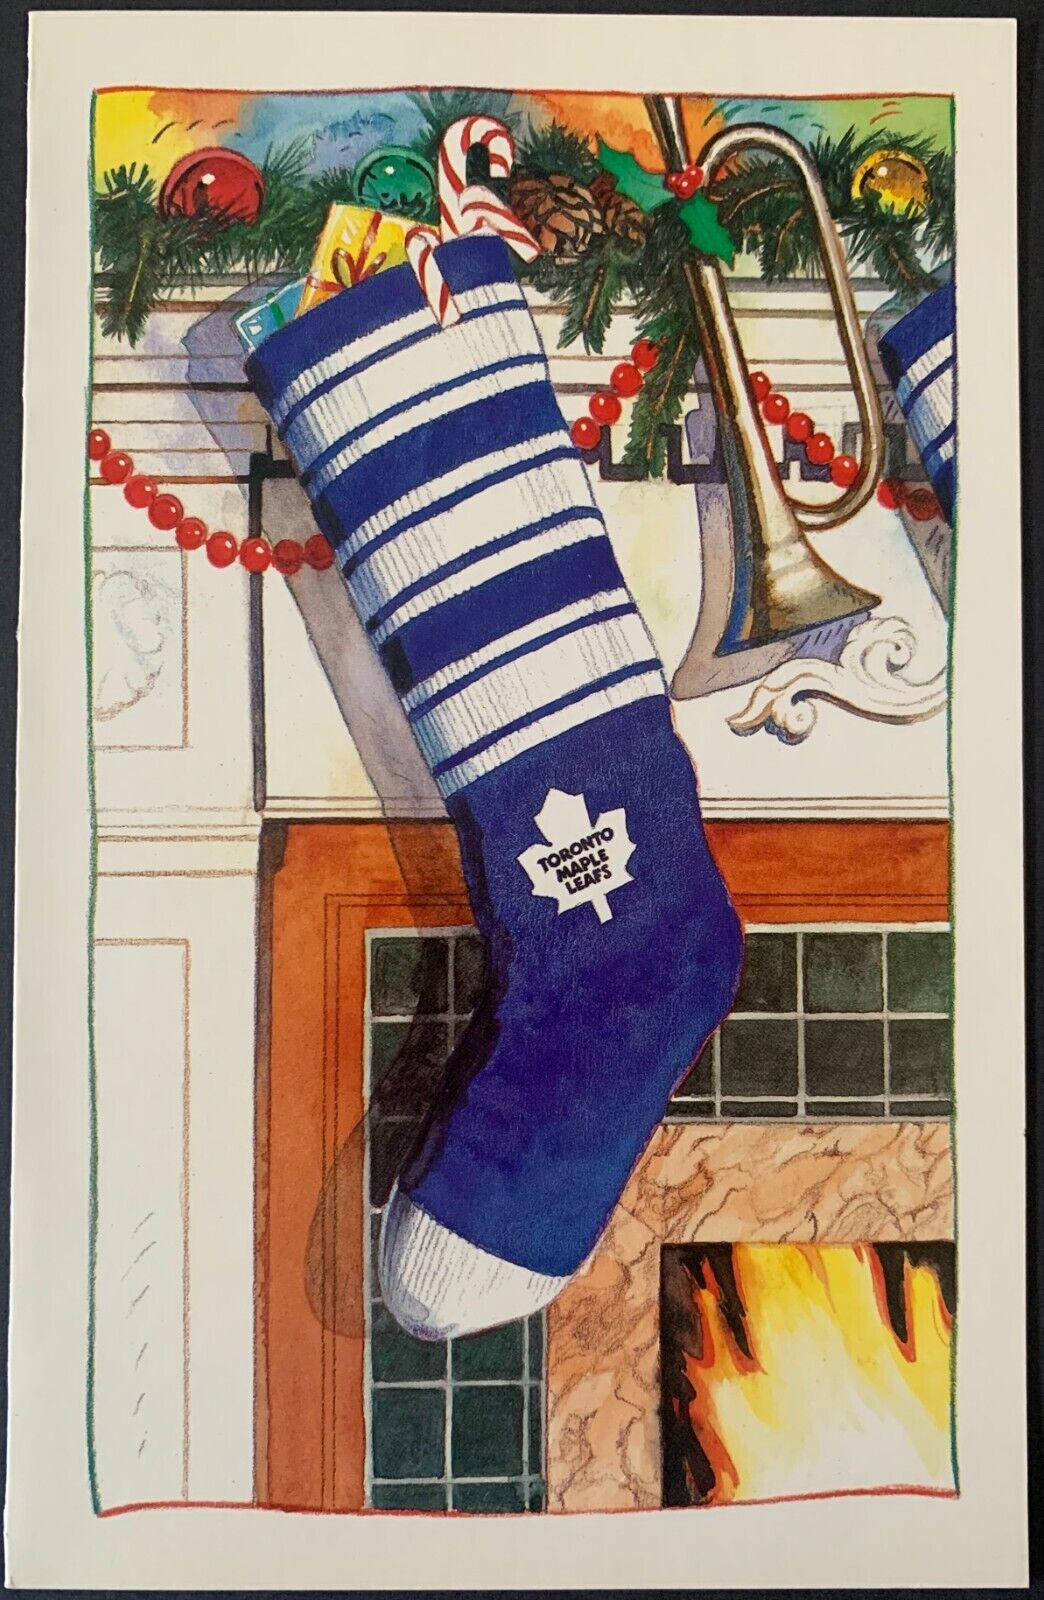 1992-1993 Toronto Maple Leafs Christmas Card Facsimile Autographs NHL Hockey VTG